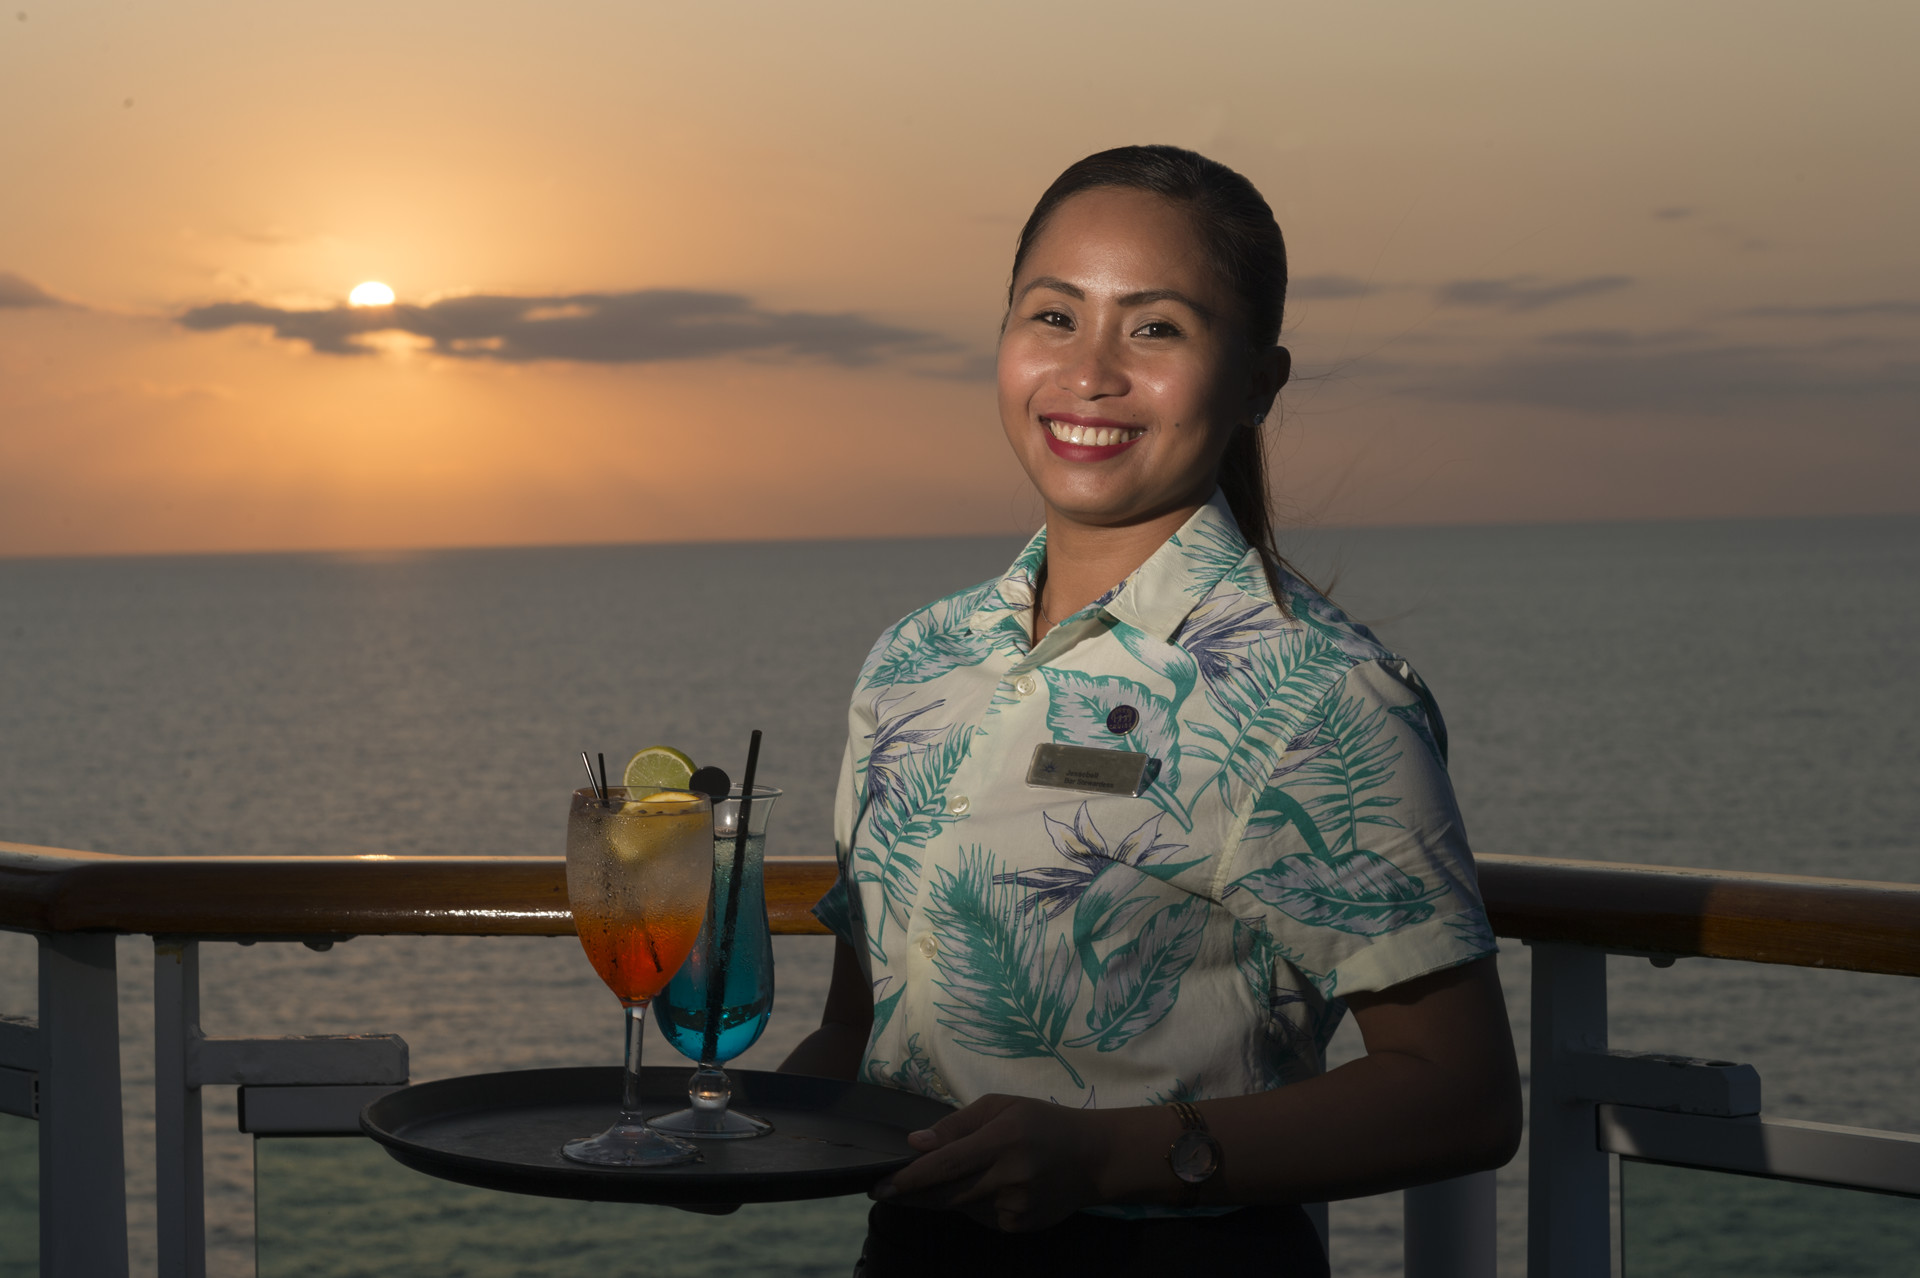 bar jobs on a cruise ship